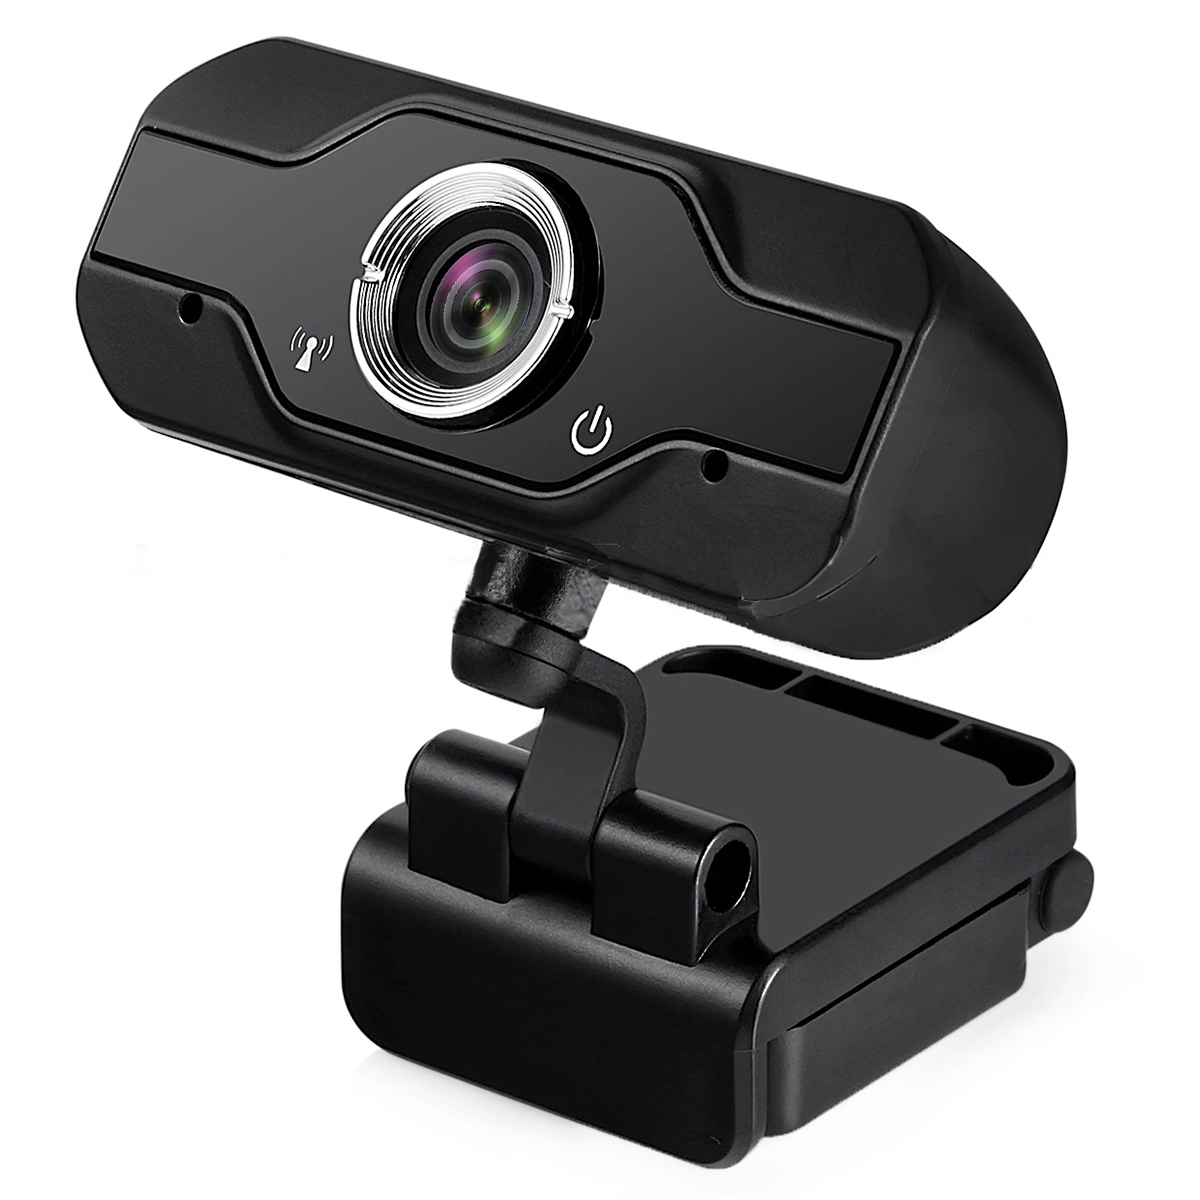 H900 1080P HD USB Webcam Built-In Microphone 1MP Optical Lens CMOS Sensor Computer Laptop Web Camera Live Video Chat Webcam